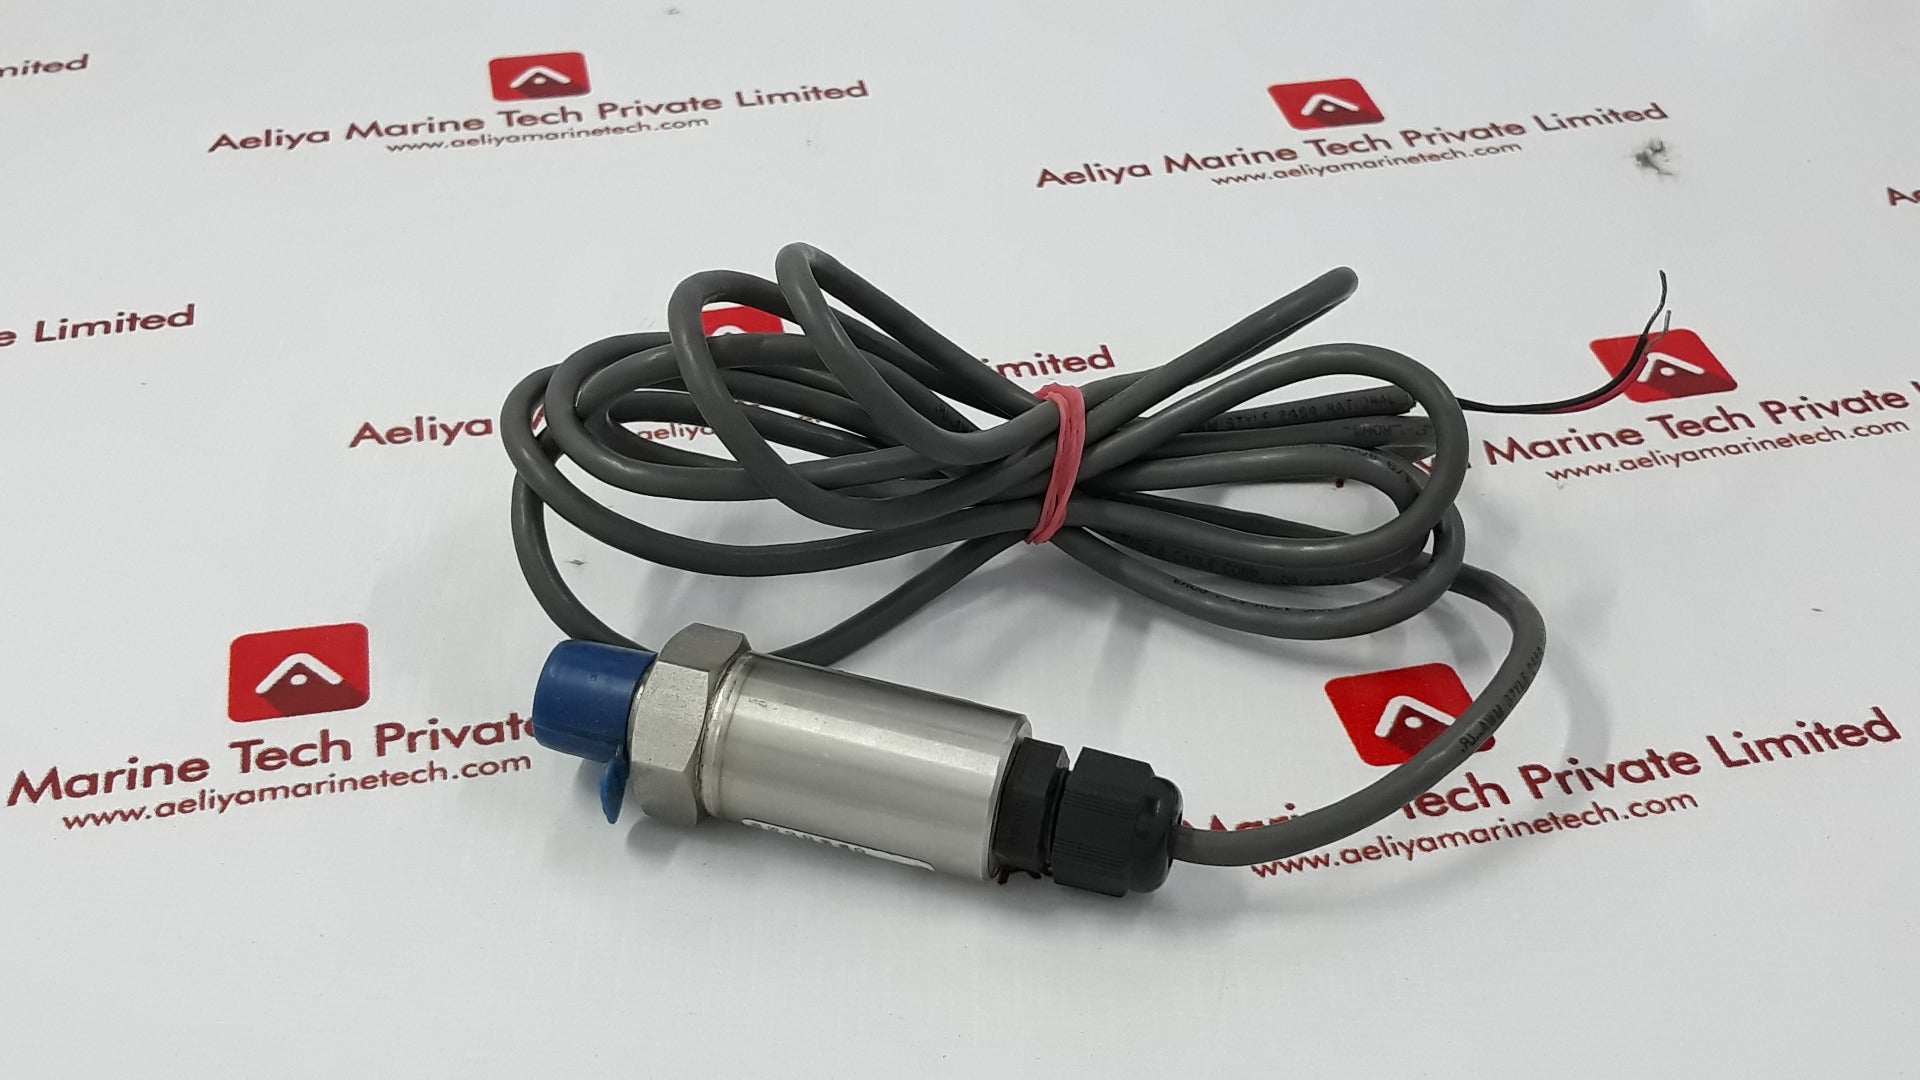 Dwyer Instruments 626-26-gh-p1-e2-s1 Pressure Transmitter Transducer Sensor 0-8000 Psi 4-20Ma